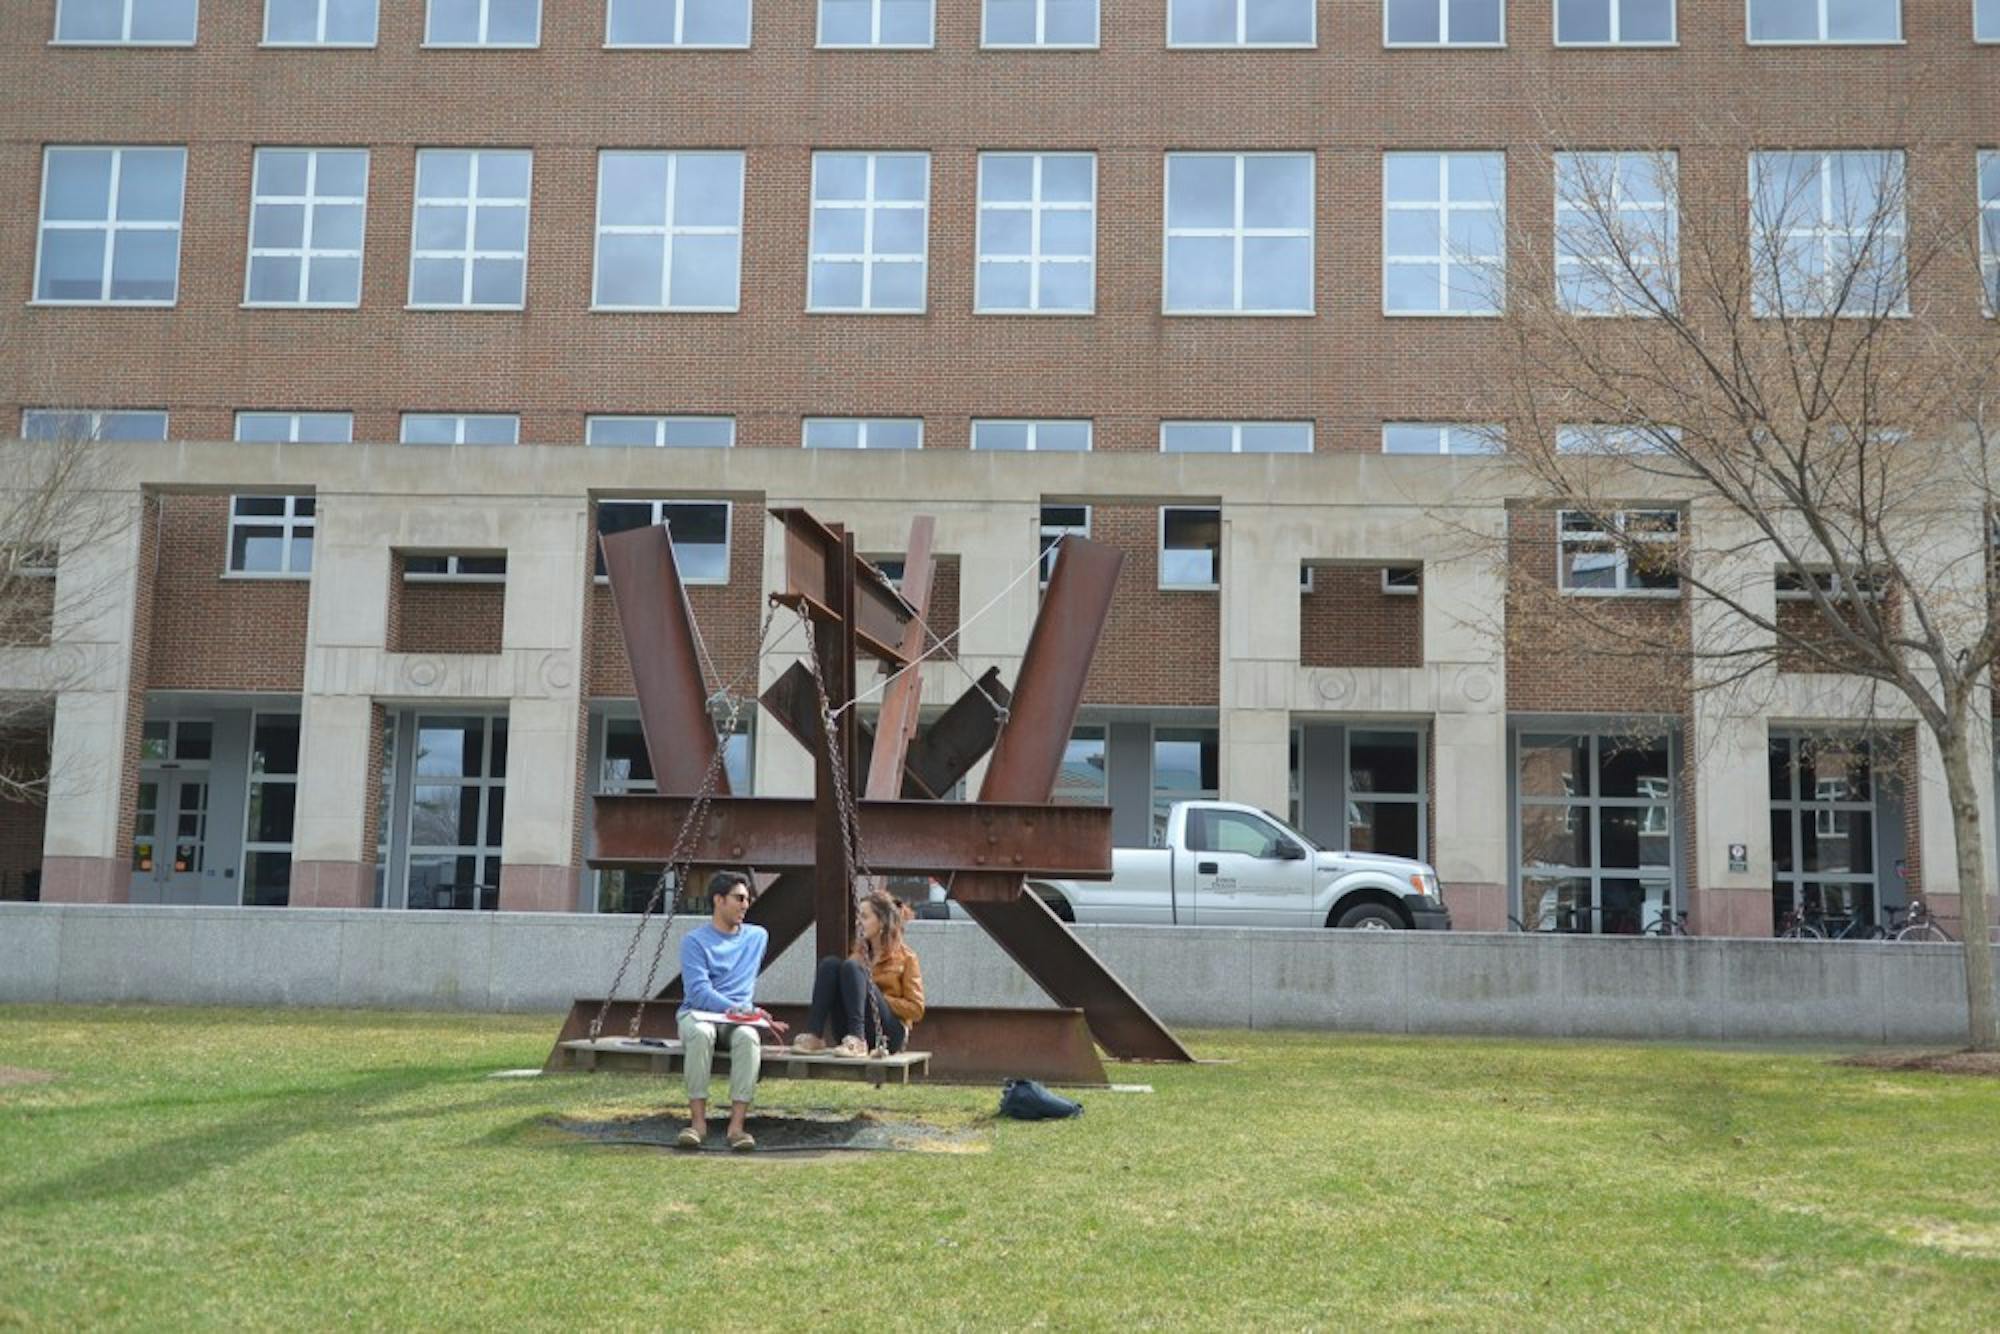 Public sculptures such as “X-Delta” help add interest to the College’s landscape design.